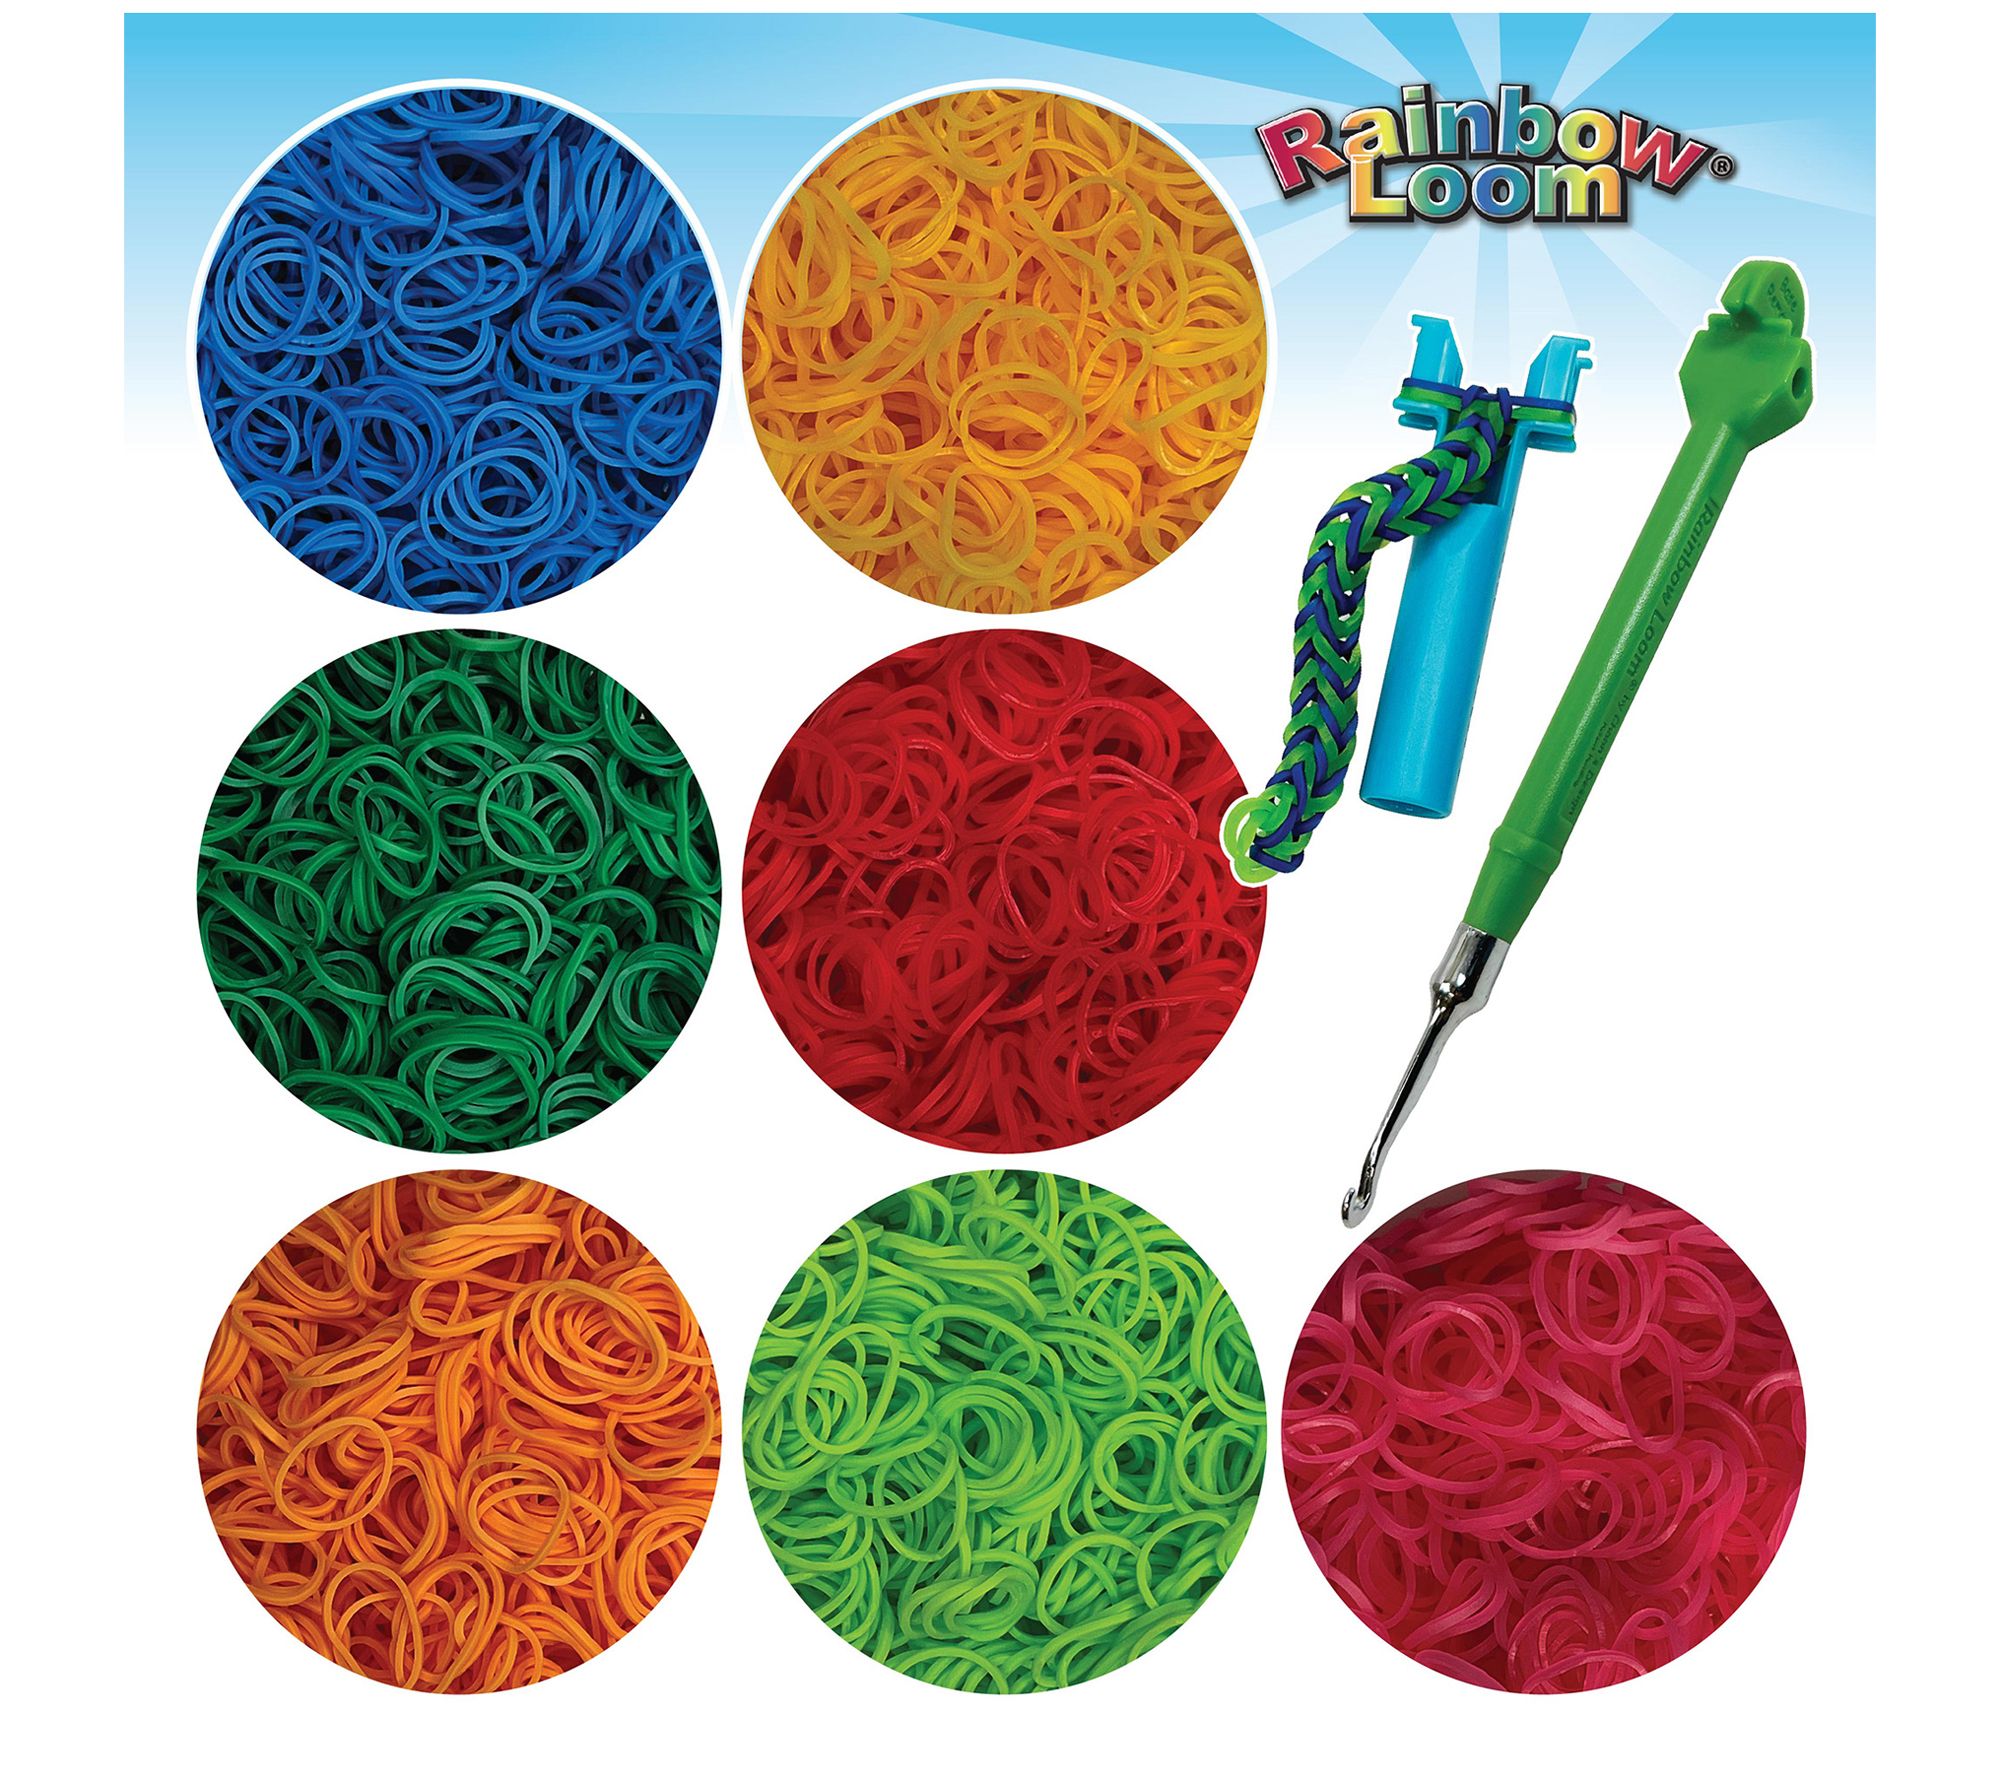 Rainbow Loom Deluxe Bracelet Kit : Target